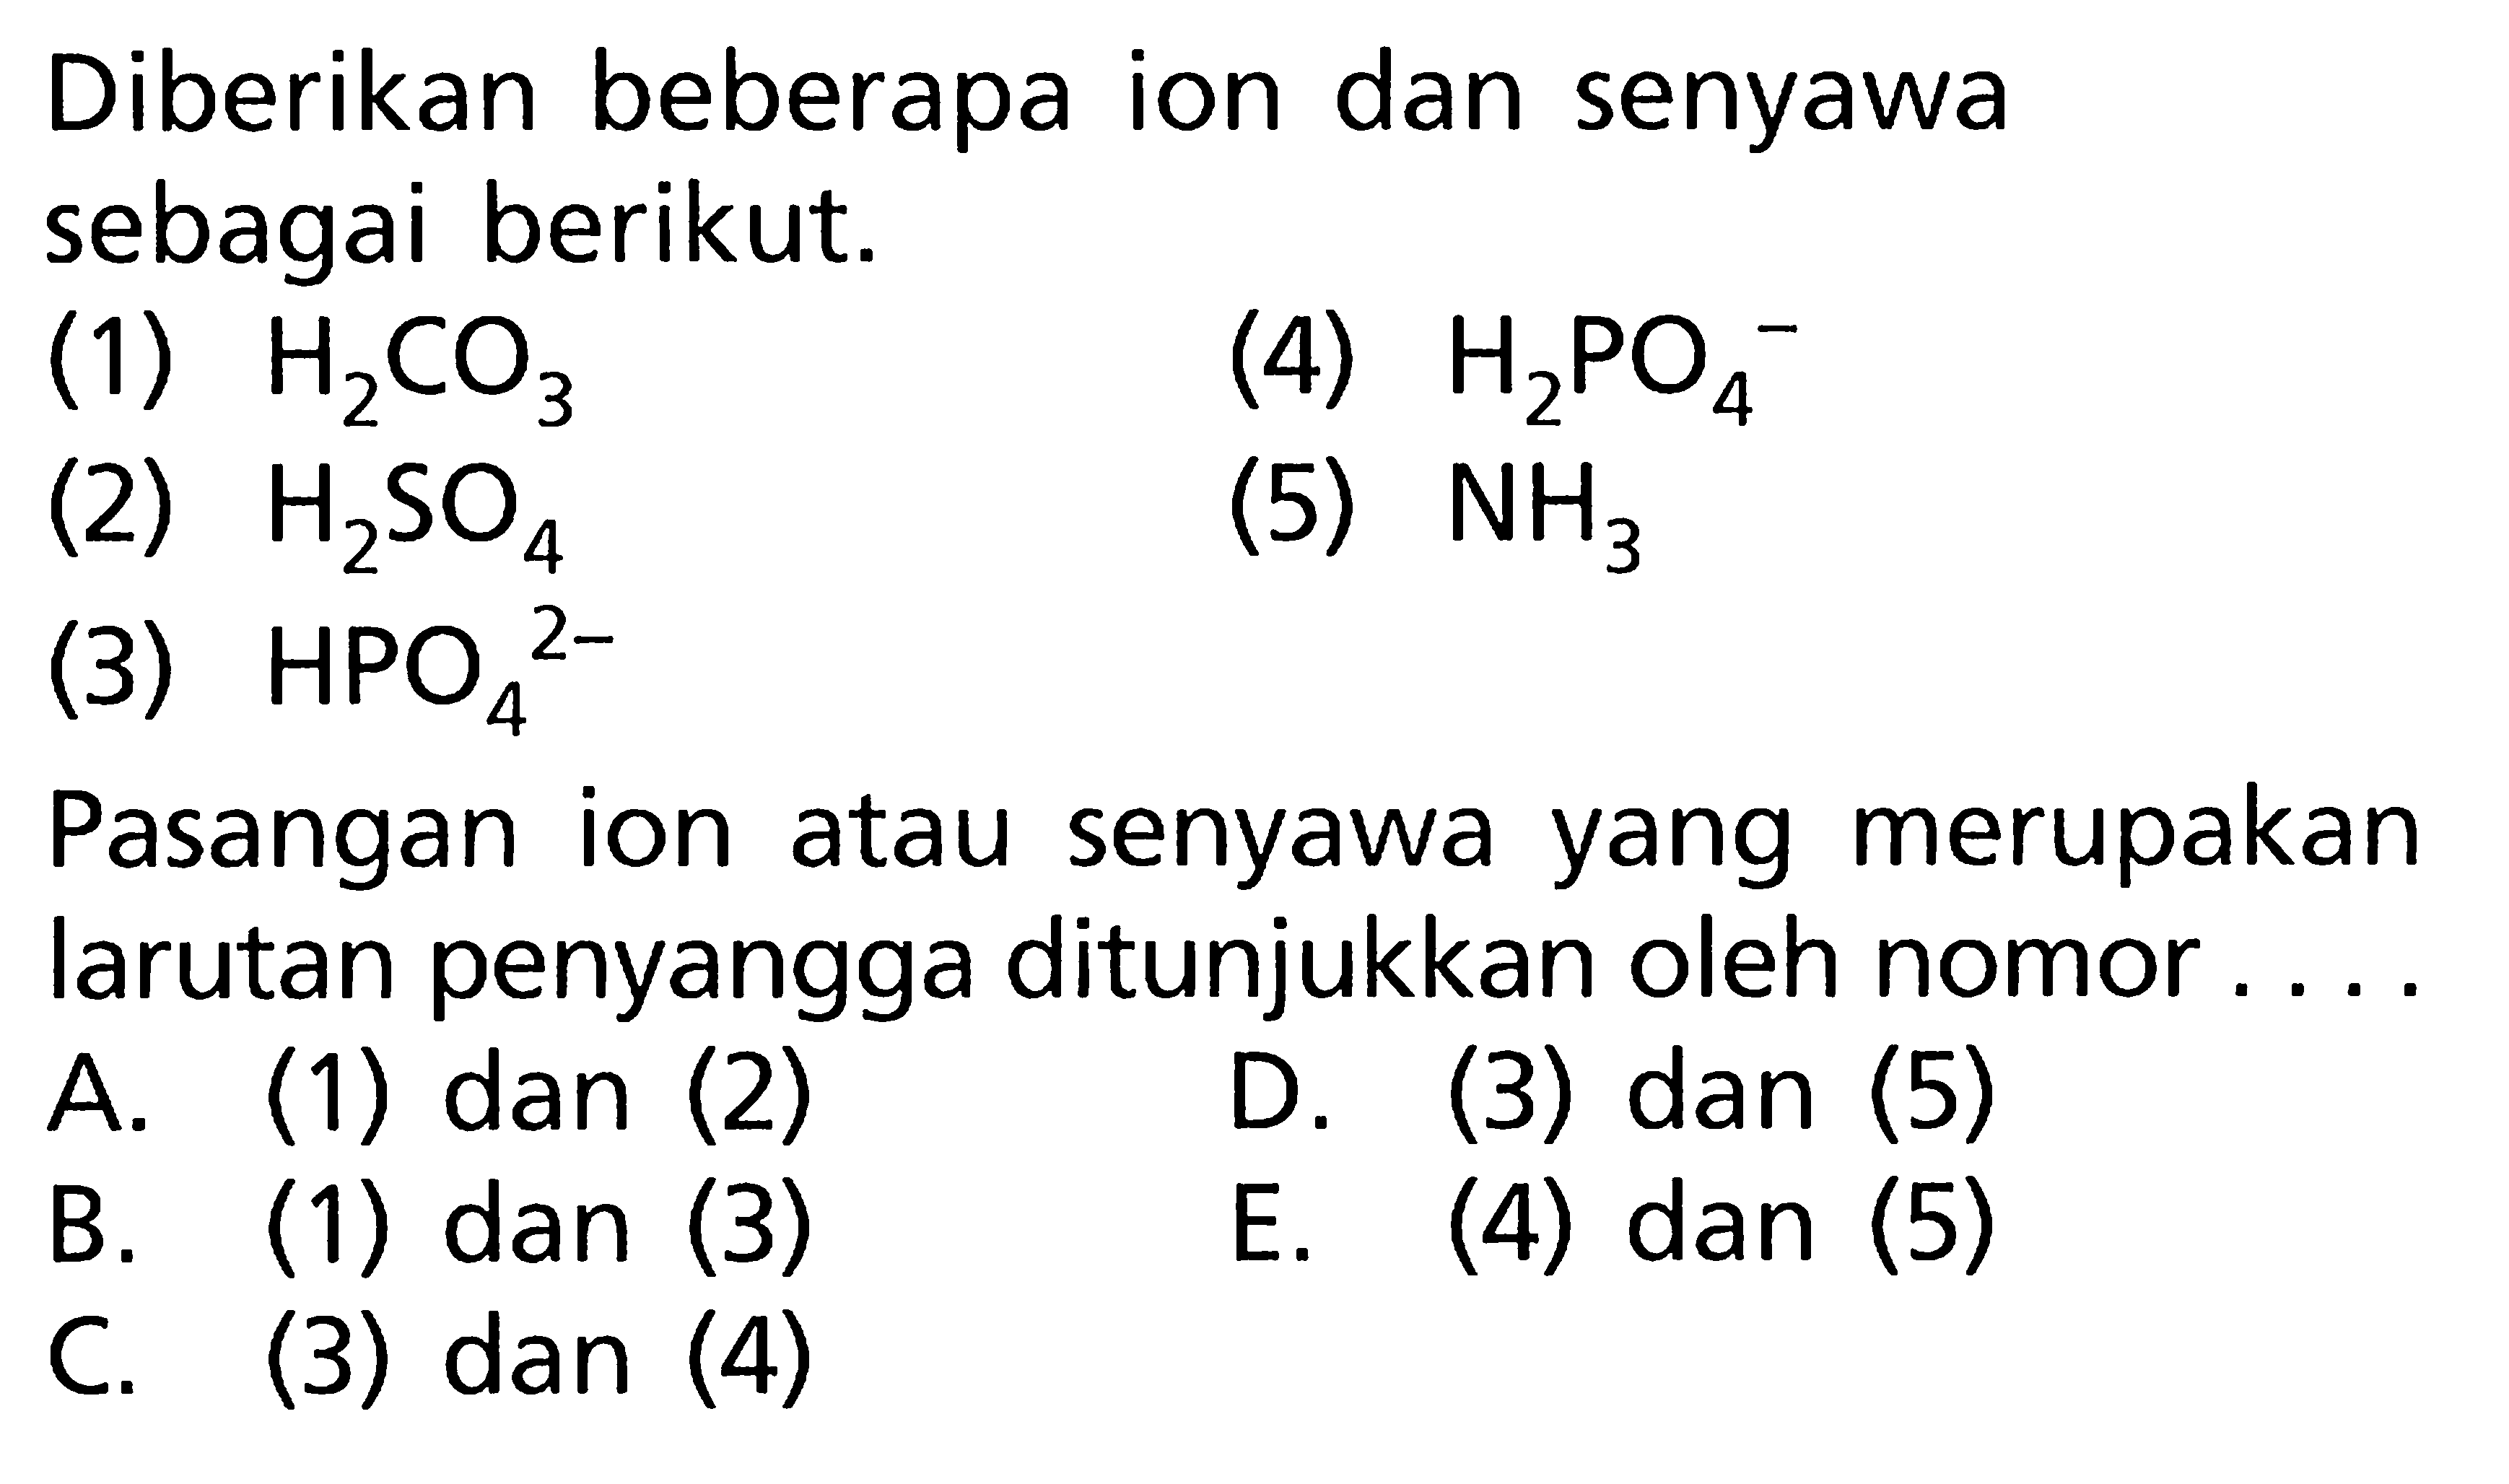 Diberikan beberapa ion dan senyawa sebagai berikut. (1) H2CO3 (2) H2SO4 (3) HPO4^2- (4) H2PO4^- (5) NH3 Pasangan ion atau senyawa yang merupakan larutan penyangga ditunjukkan oleh nomor.... A. (1) dan (2) B. (1) dan (3) C. (3) dan (4) D. (3) dan (5) E. (4) dan (5)